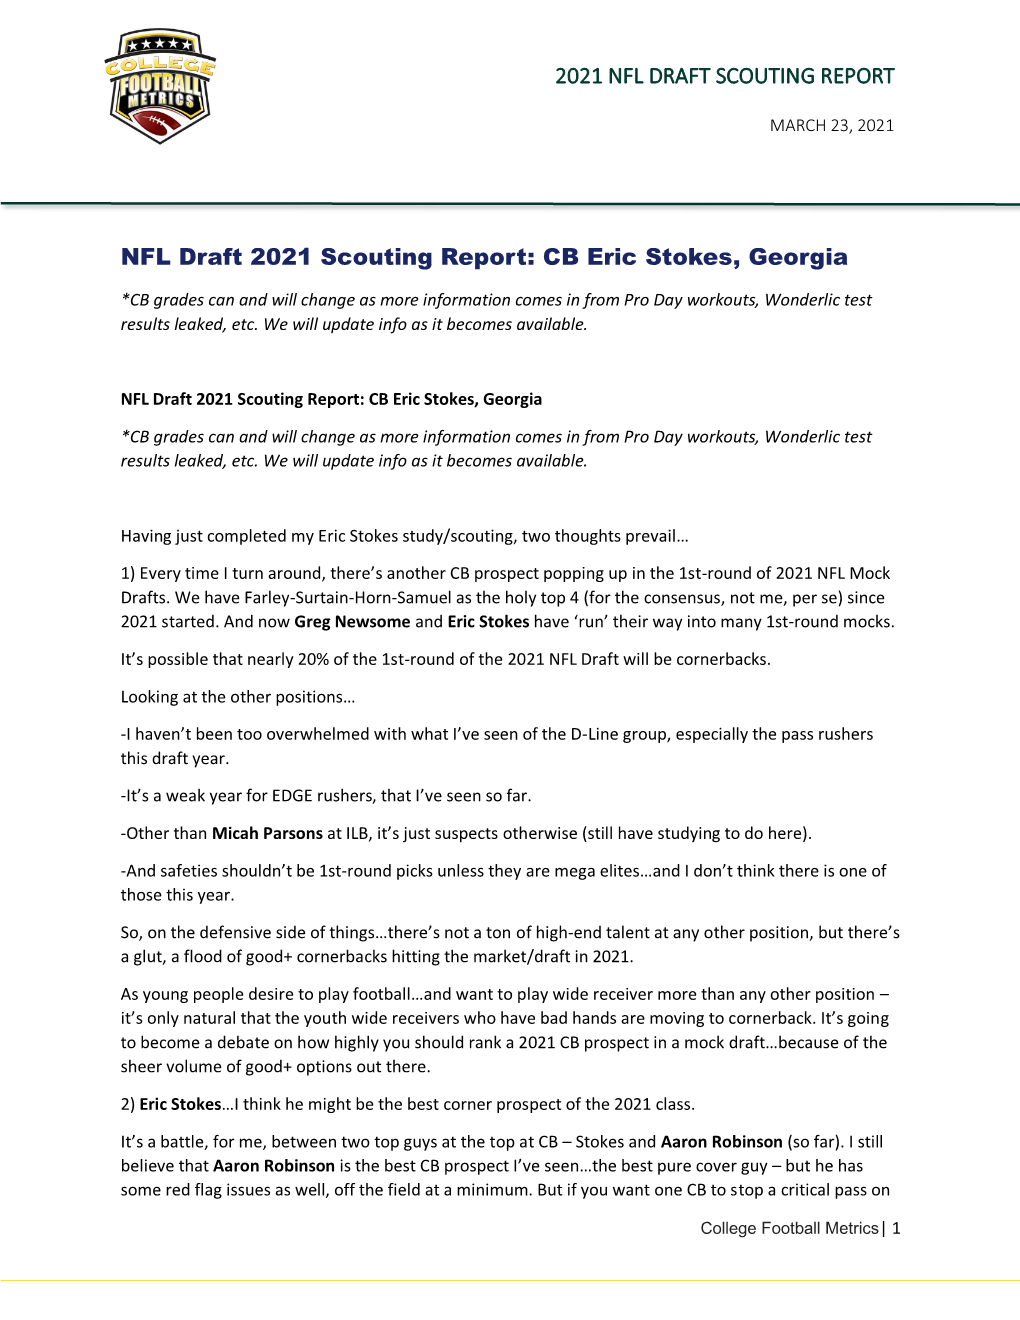 NFL Draft 2021 Scouting Report: CB Eric Stokes, Georgia